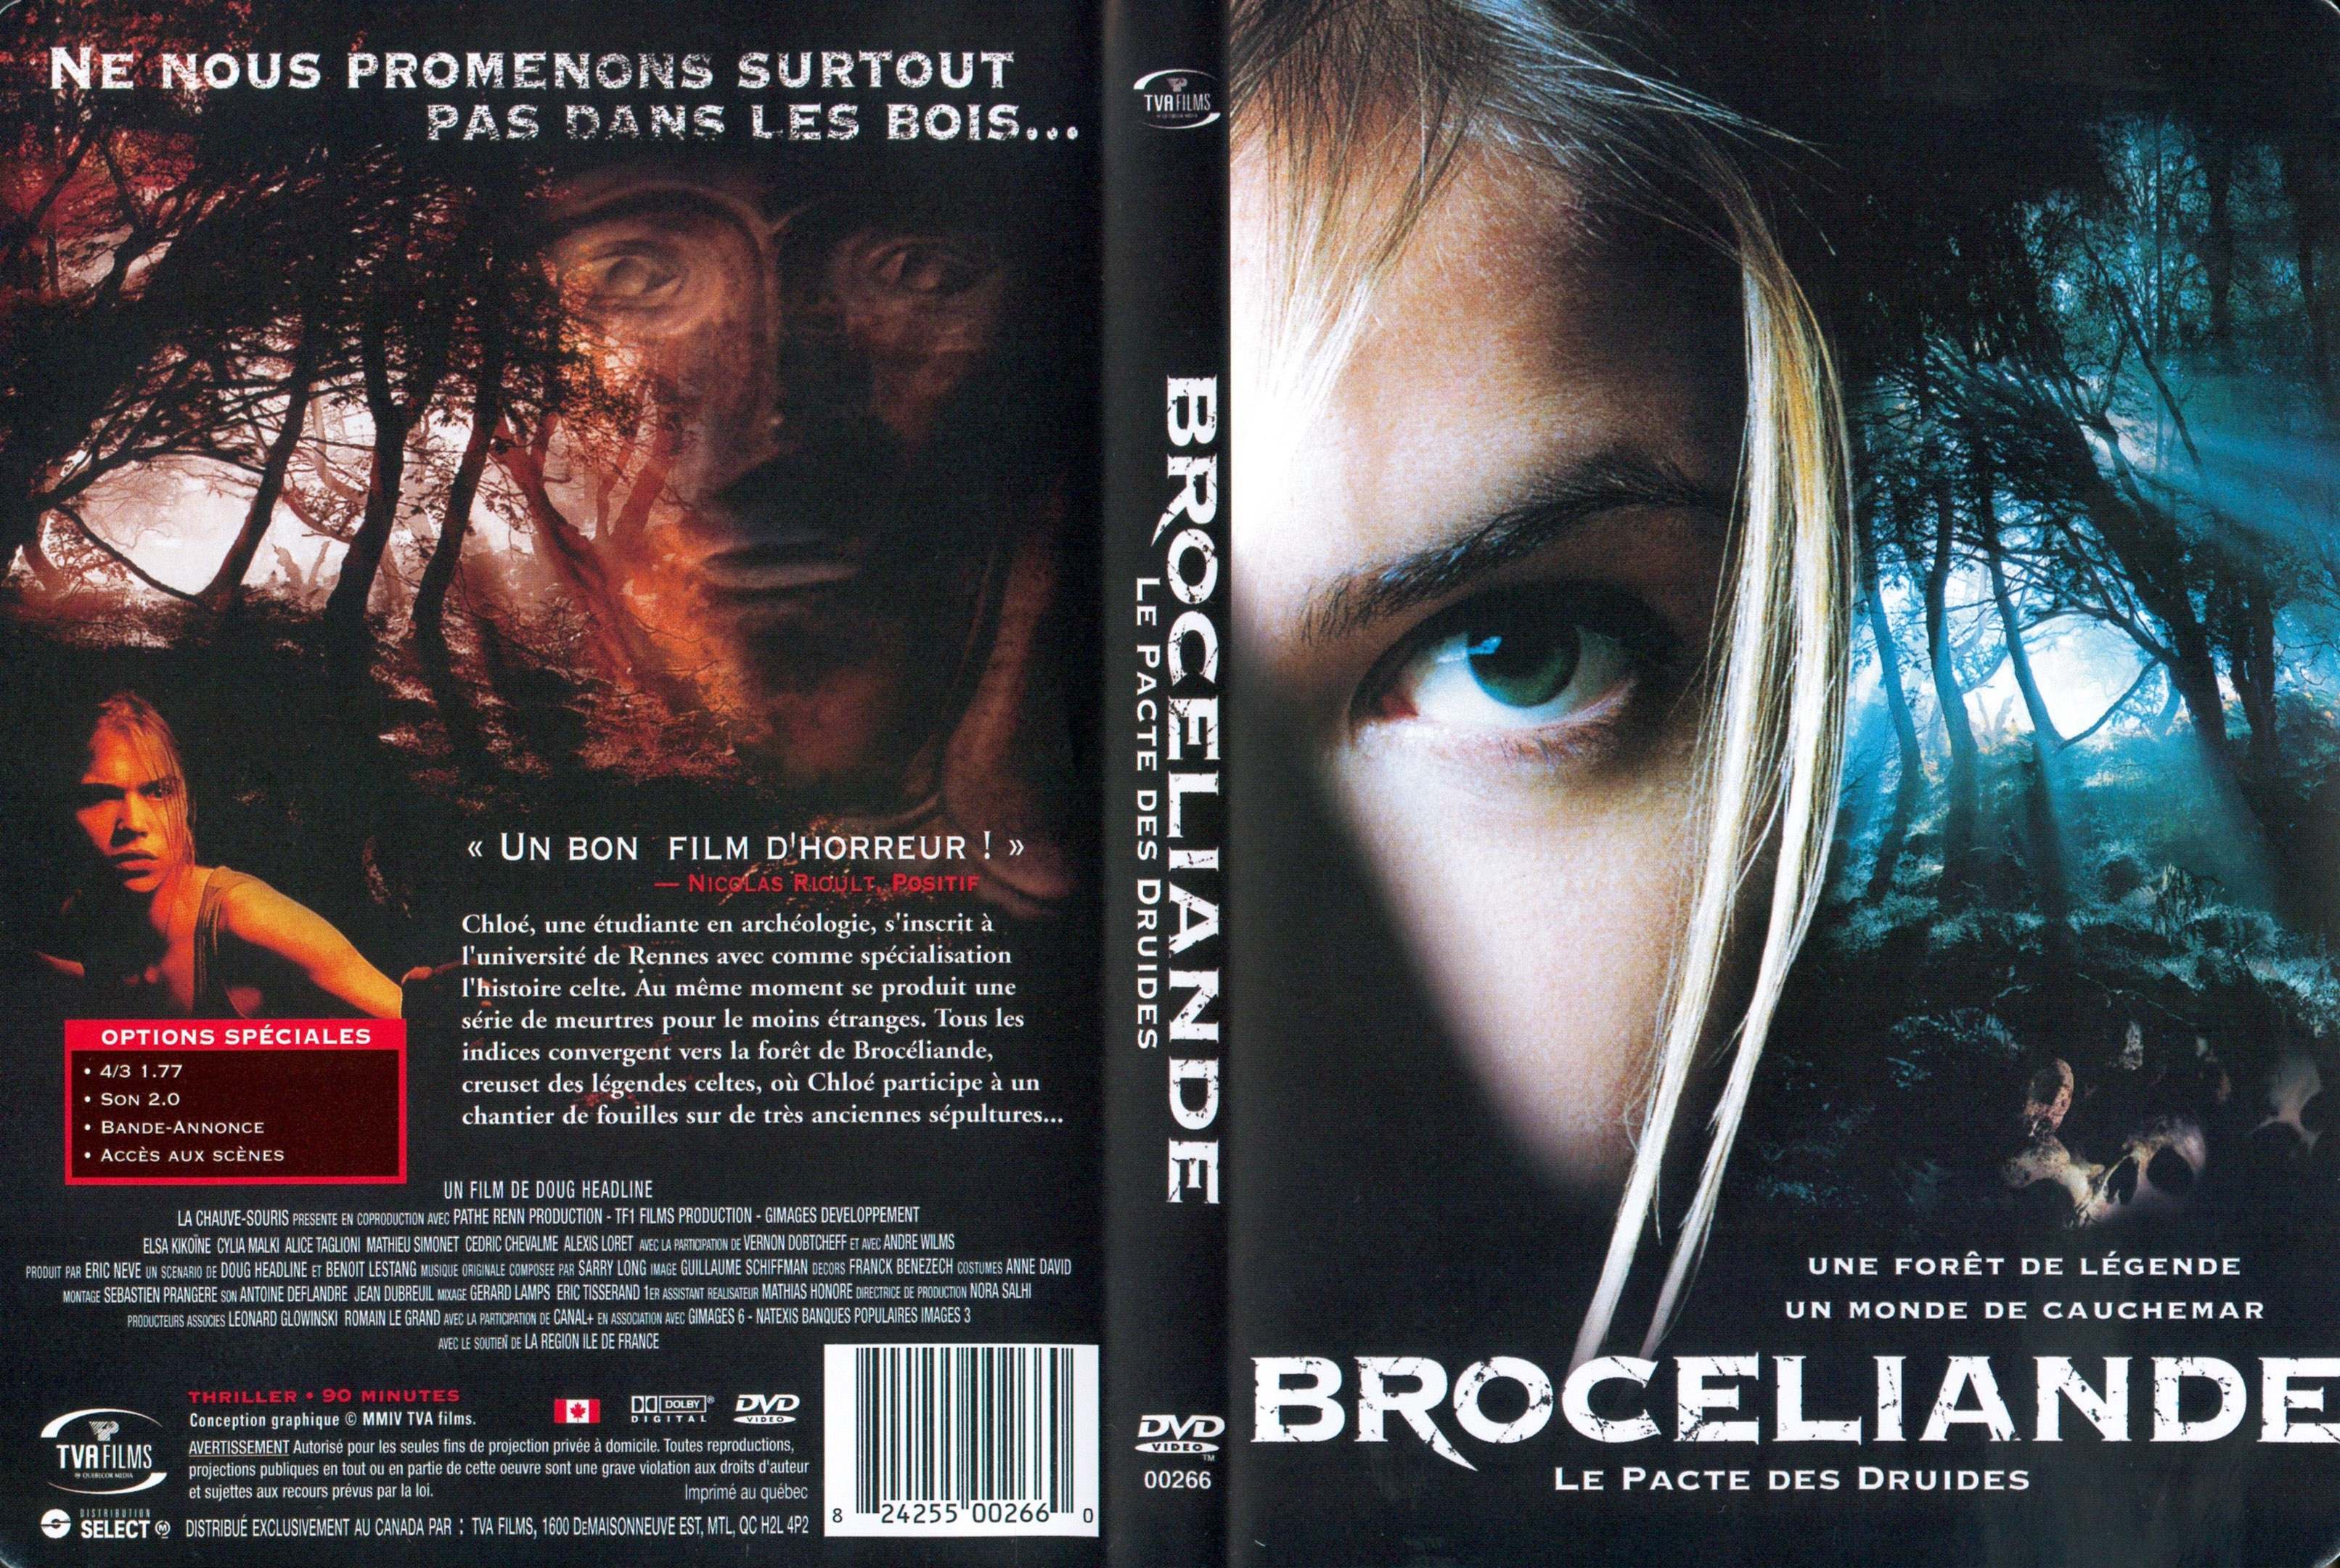 Jaquette DVD Broceliande v2